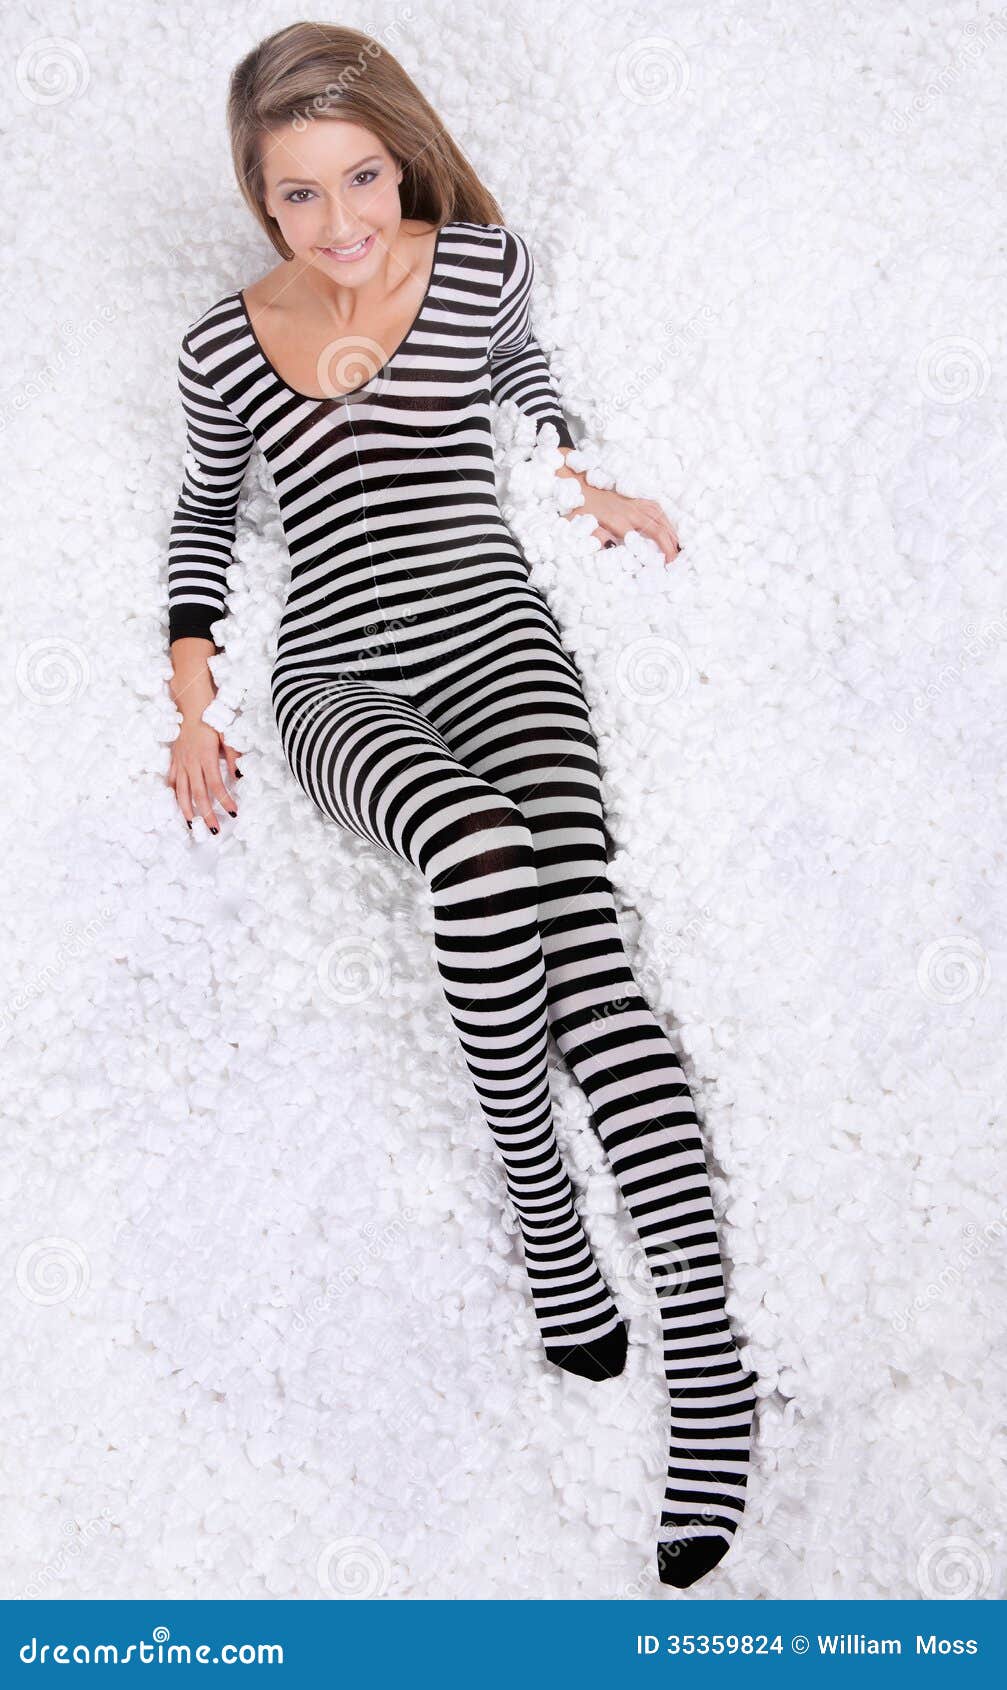 https://thumbs.dreamstime.com/z/teen-bodysuit-packing-peanuts-fun-image-teenage-girl-striped-lying-top-lot-white-35359824.jpg